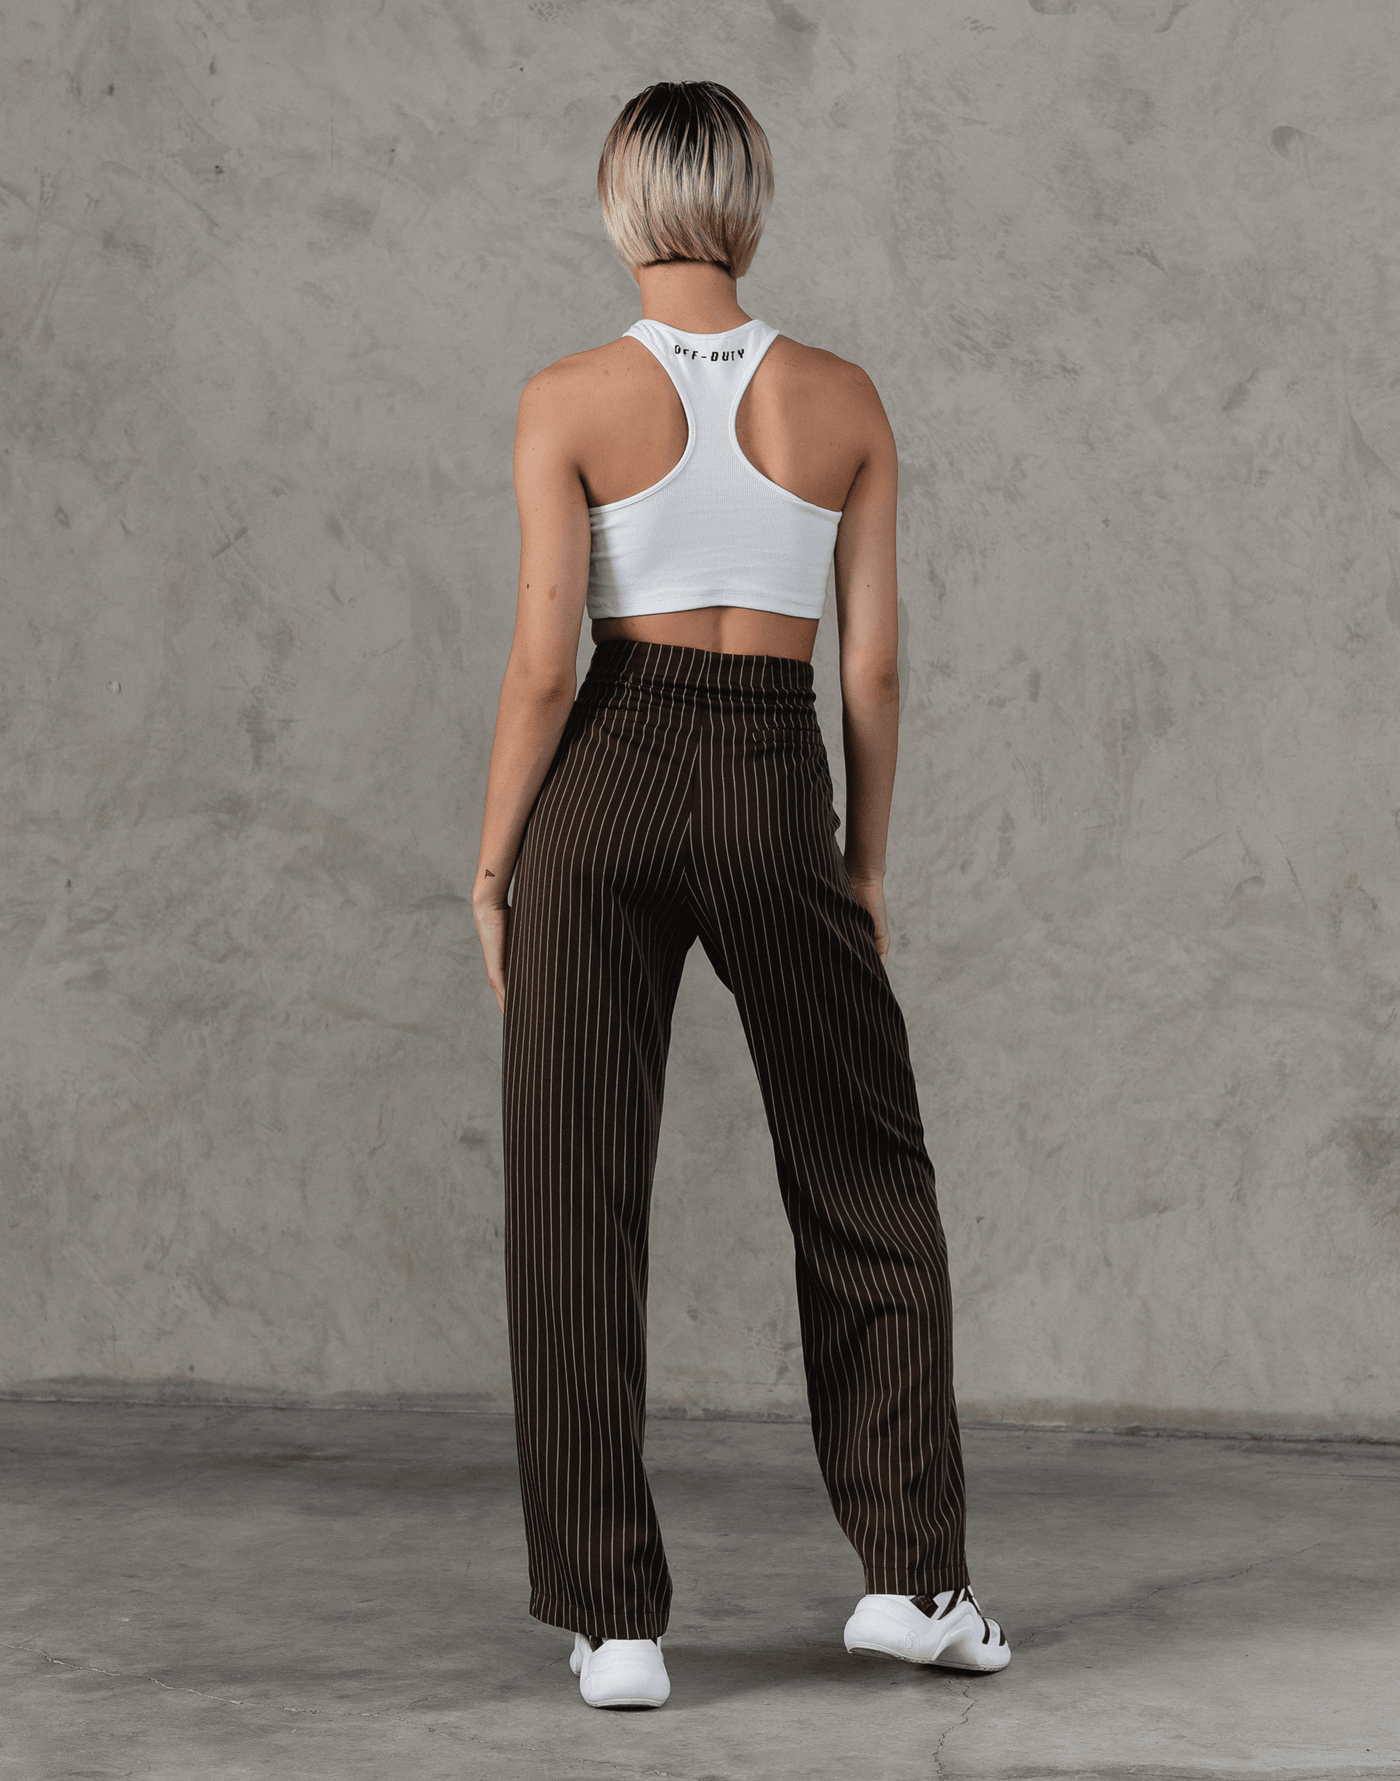 Calabasas Pants (Brown) - Brown Pinstripe High Waisted Pants - Women's Pants - Charcoal Clothing